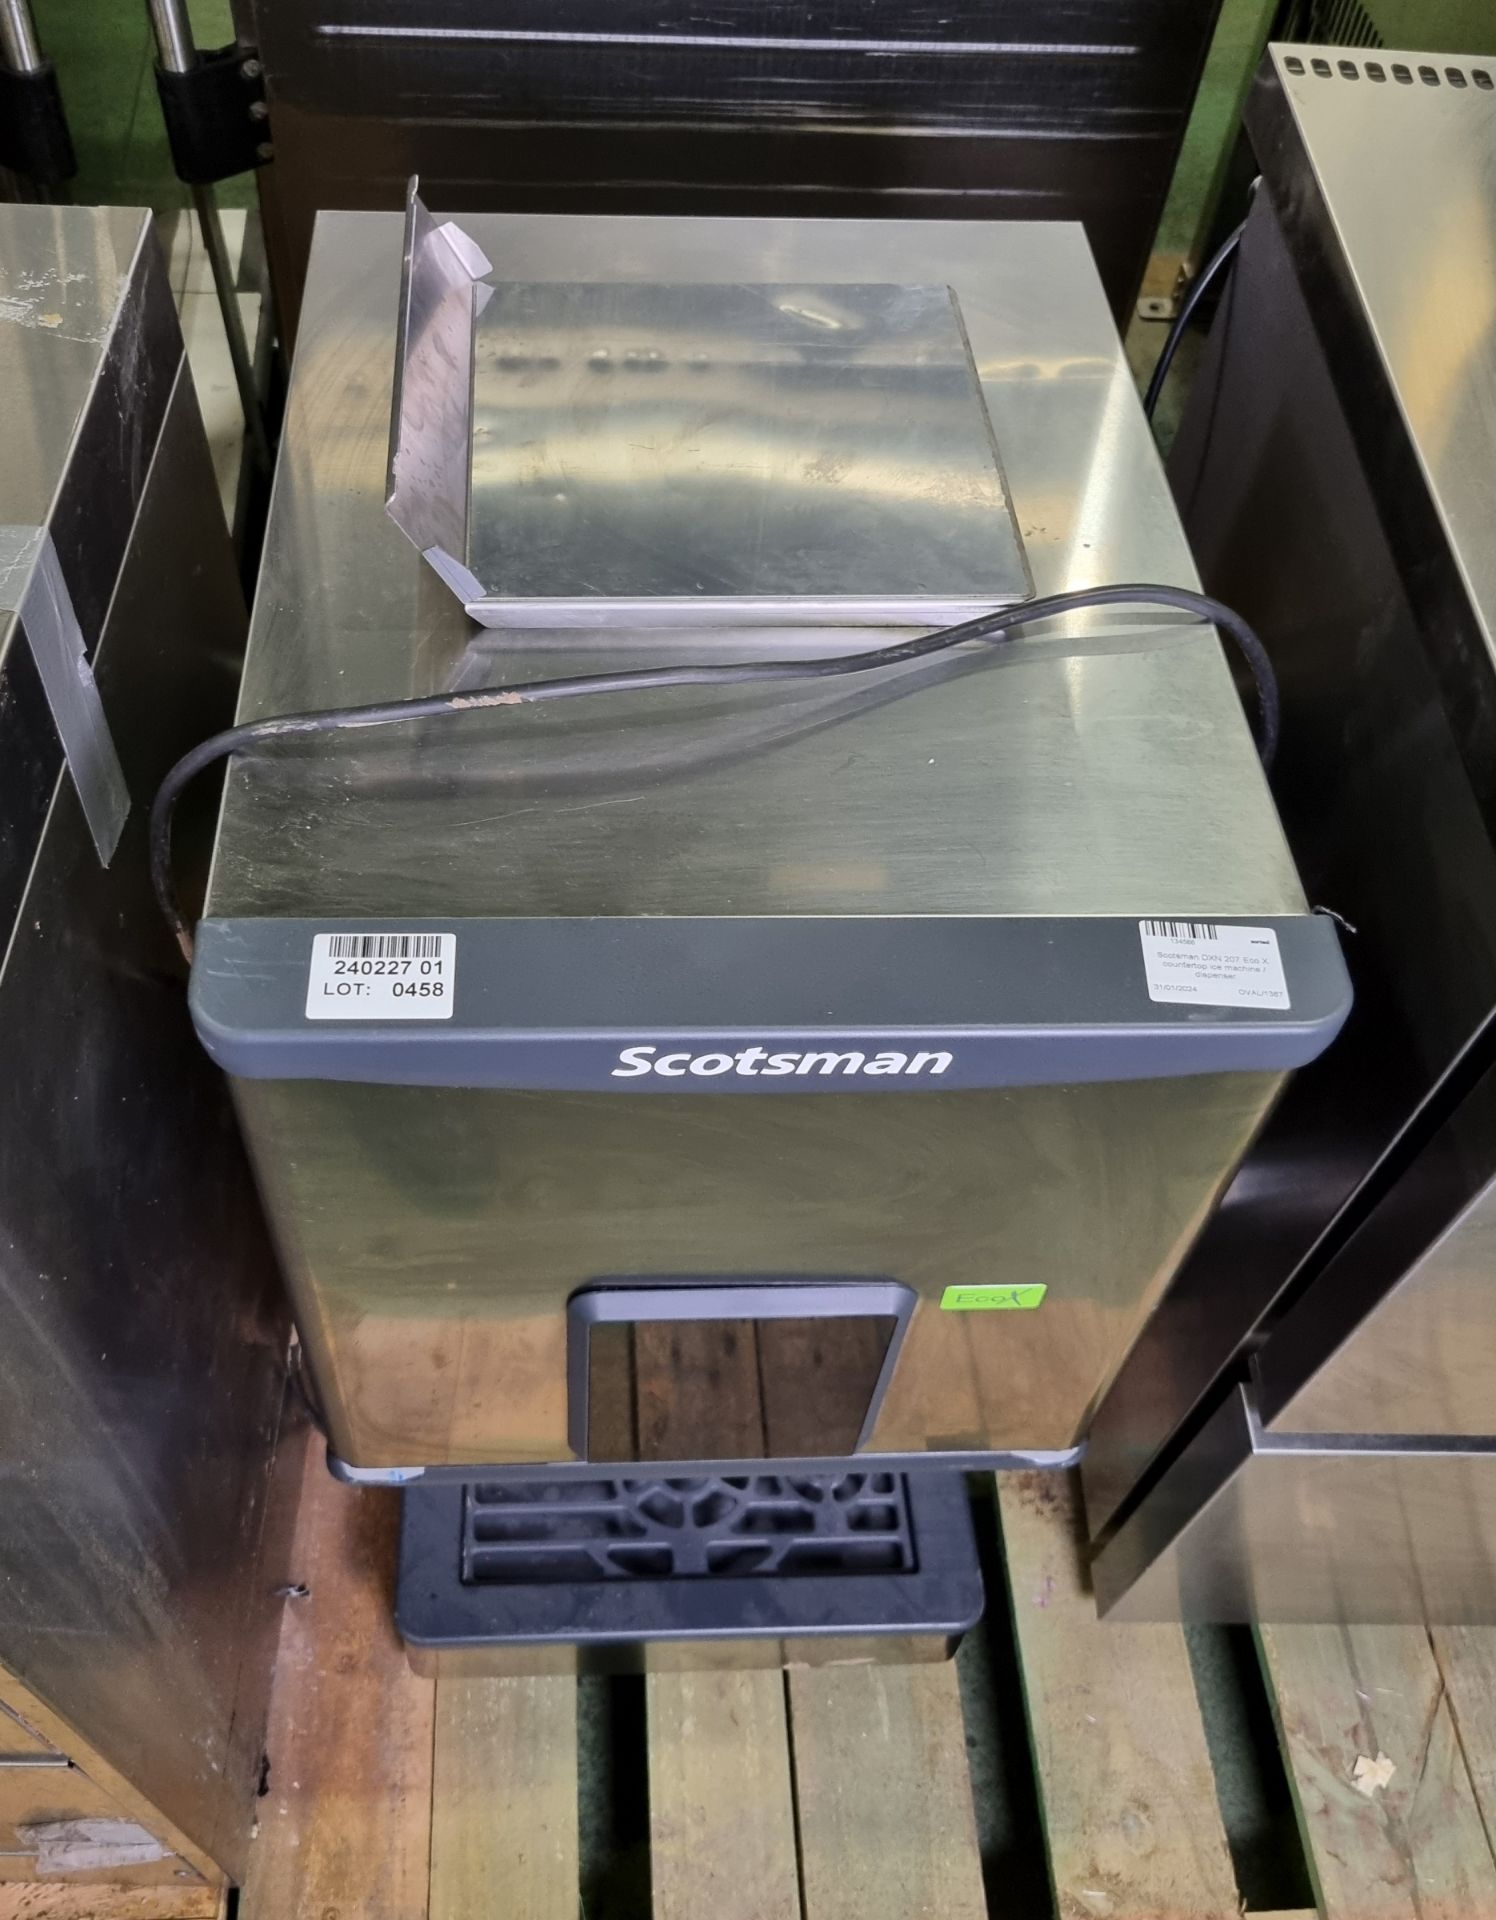 Scotsman DXN 207 Eco X countertop ice machine / dispenser - Image 2 of 3